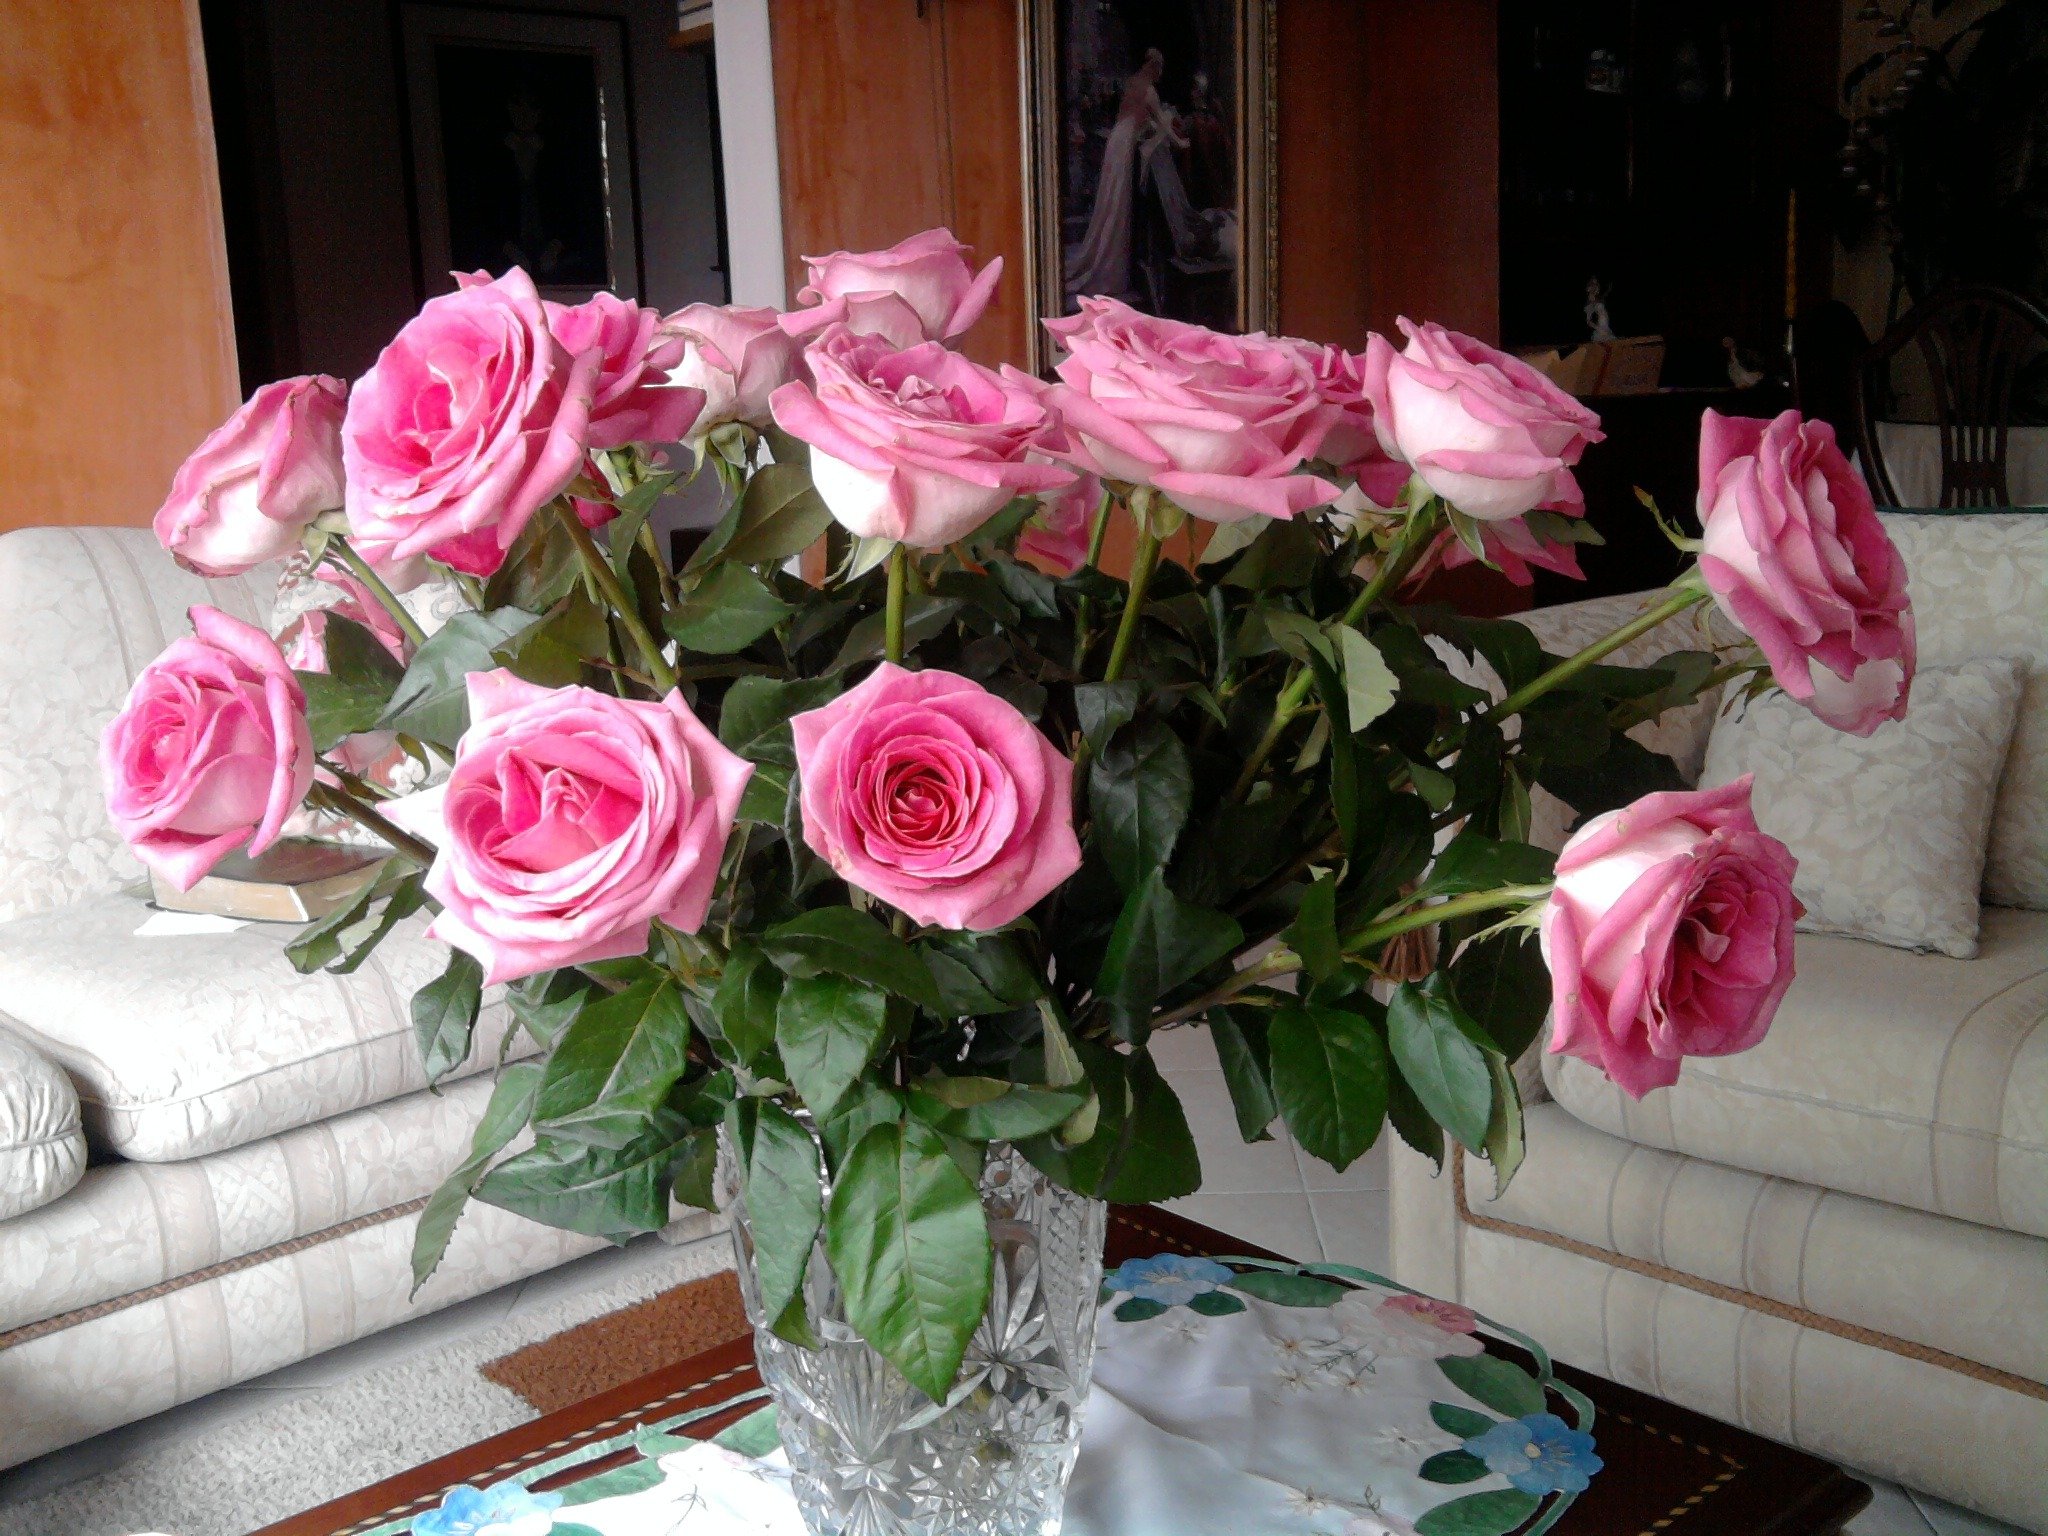 Букеты роз в вазе на столе. Розы в вазе на столе. Розовые розы в вазе. Букет роз на окне. Розовые розы.